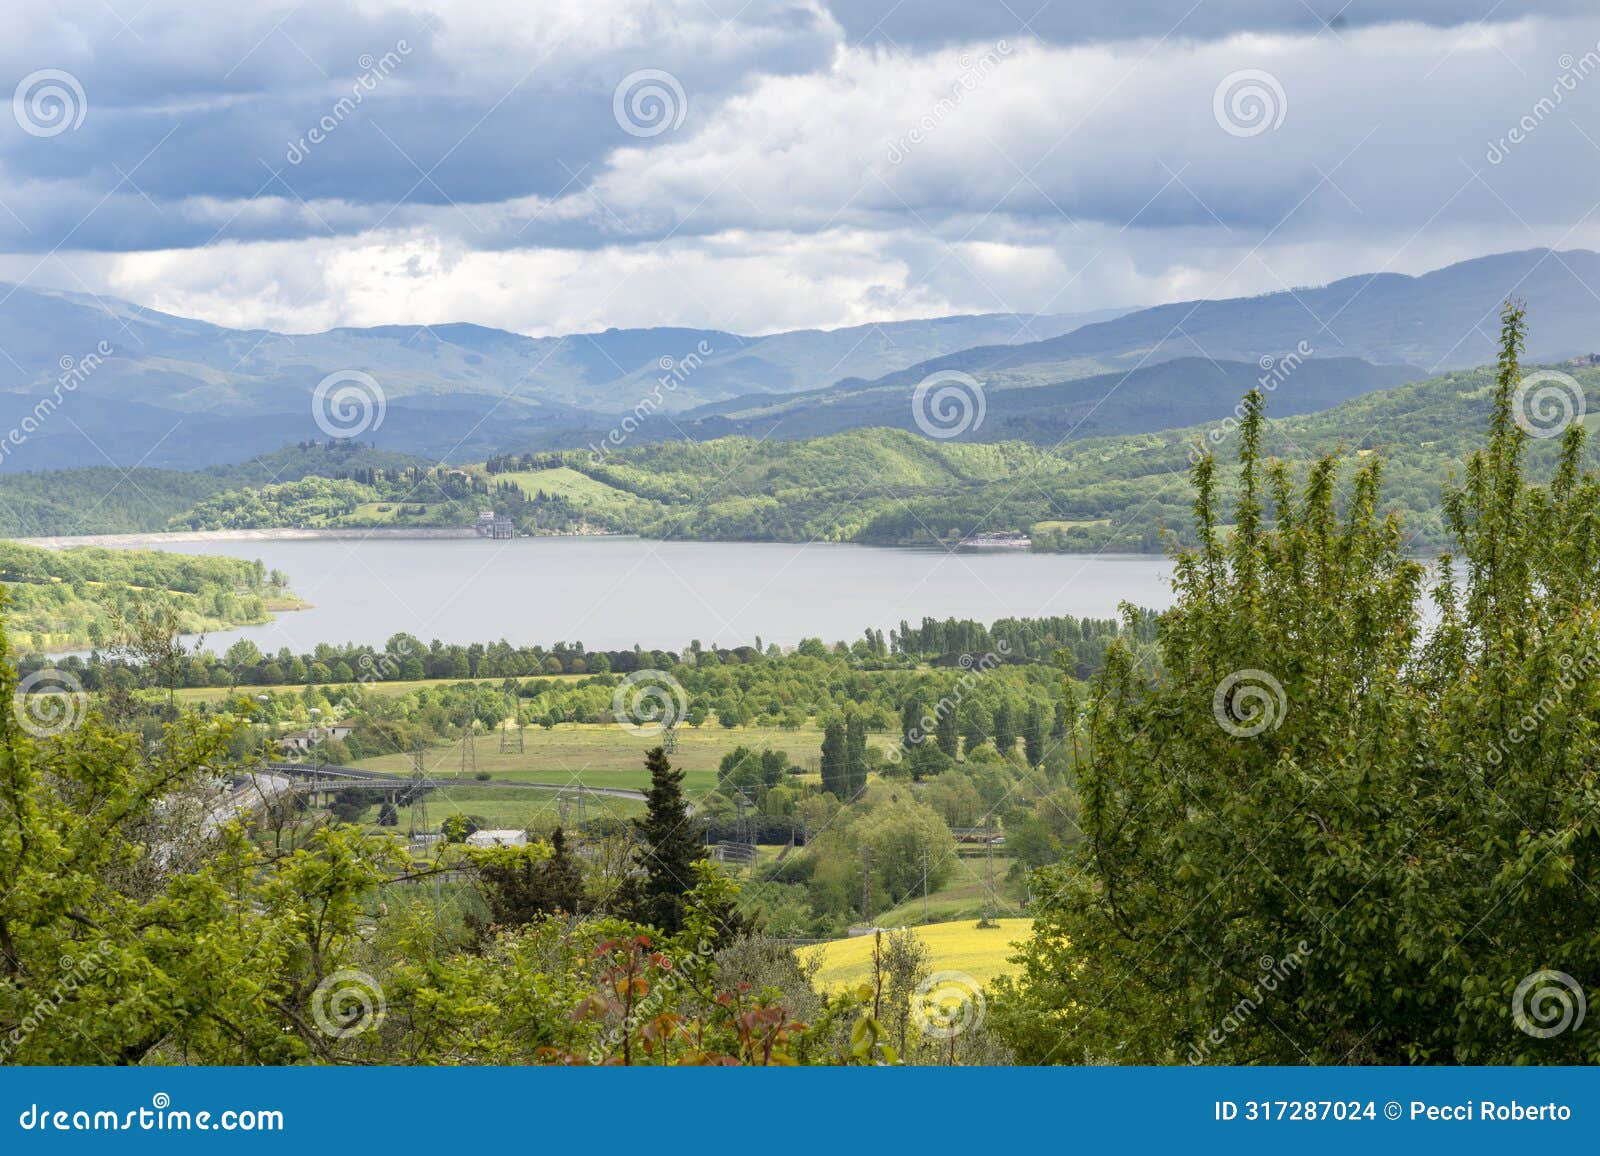 italy florence, barberino del mugello, bilancino lake, lakeside trekking and panoramic views lake view